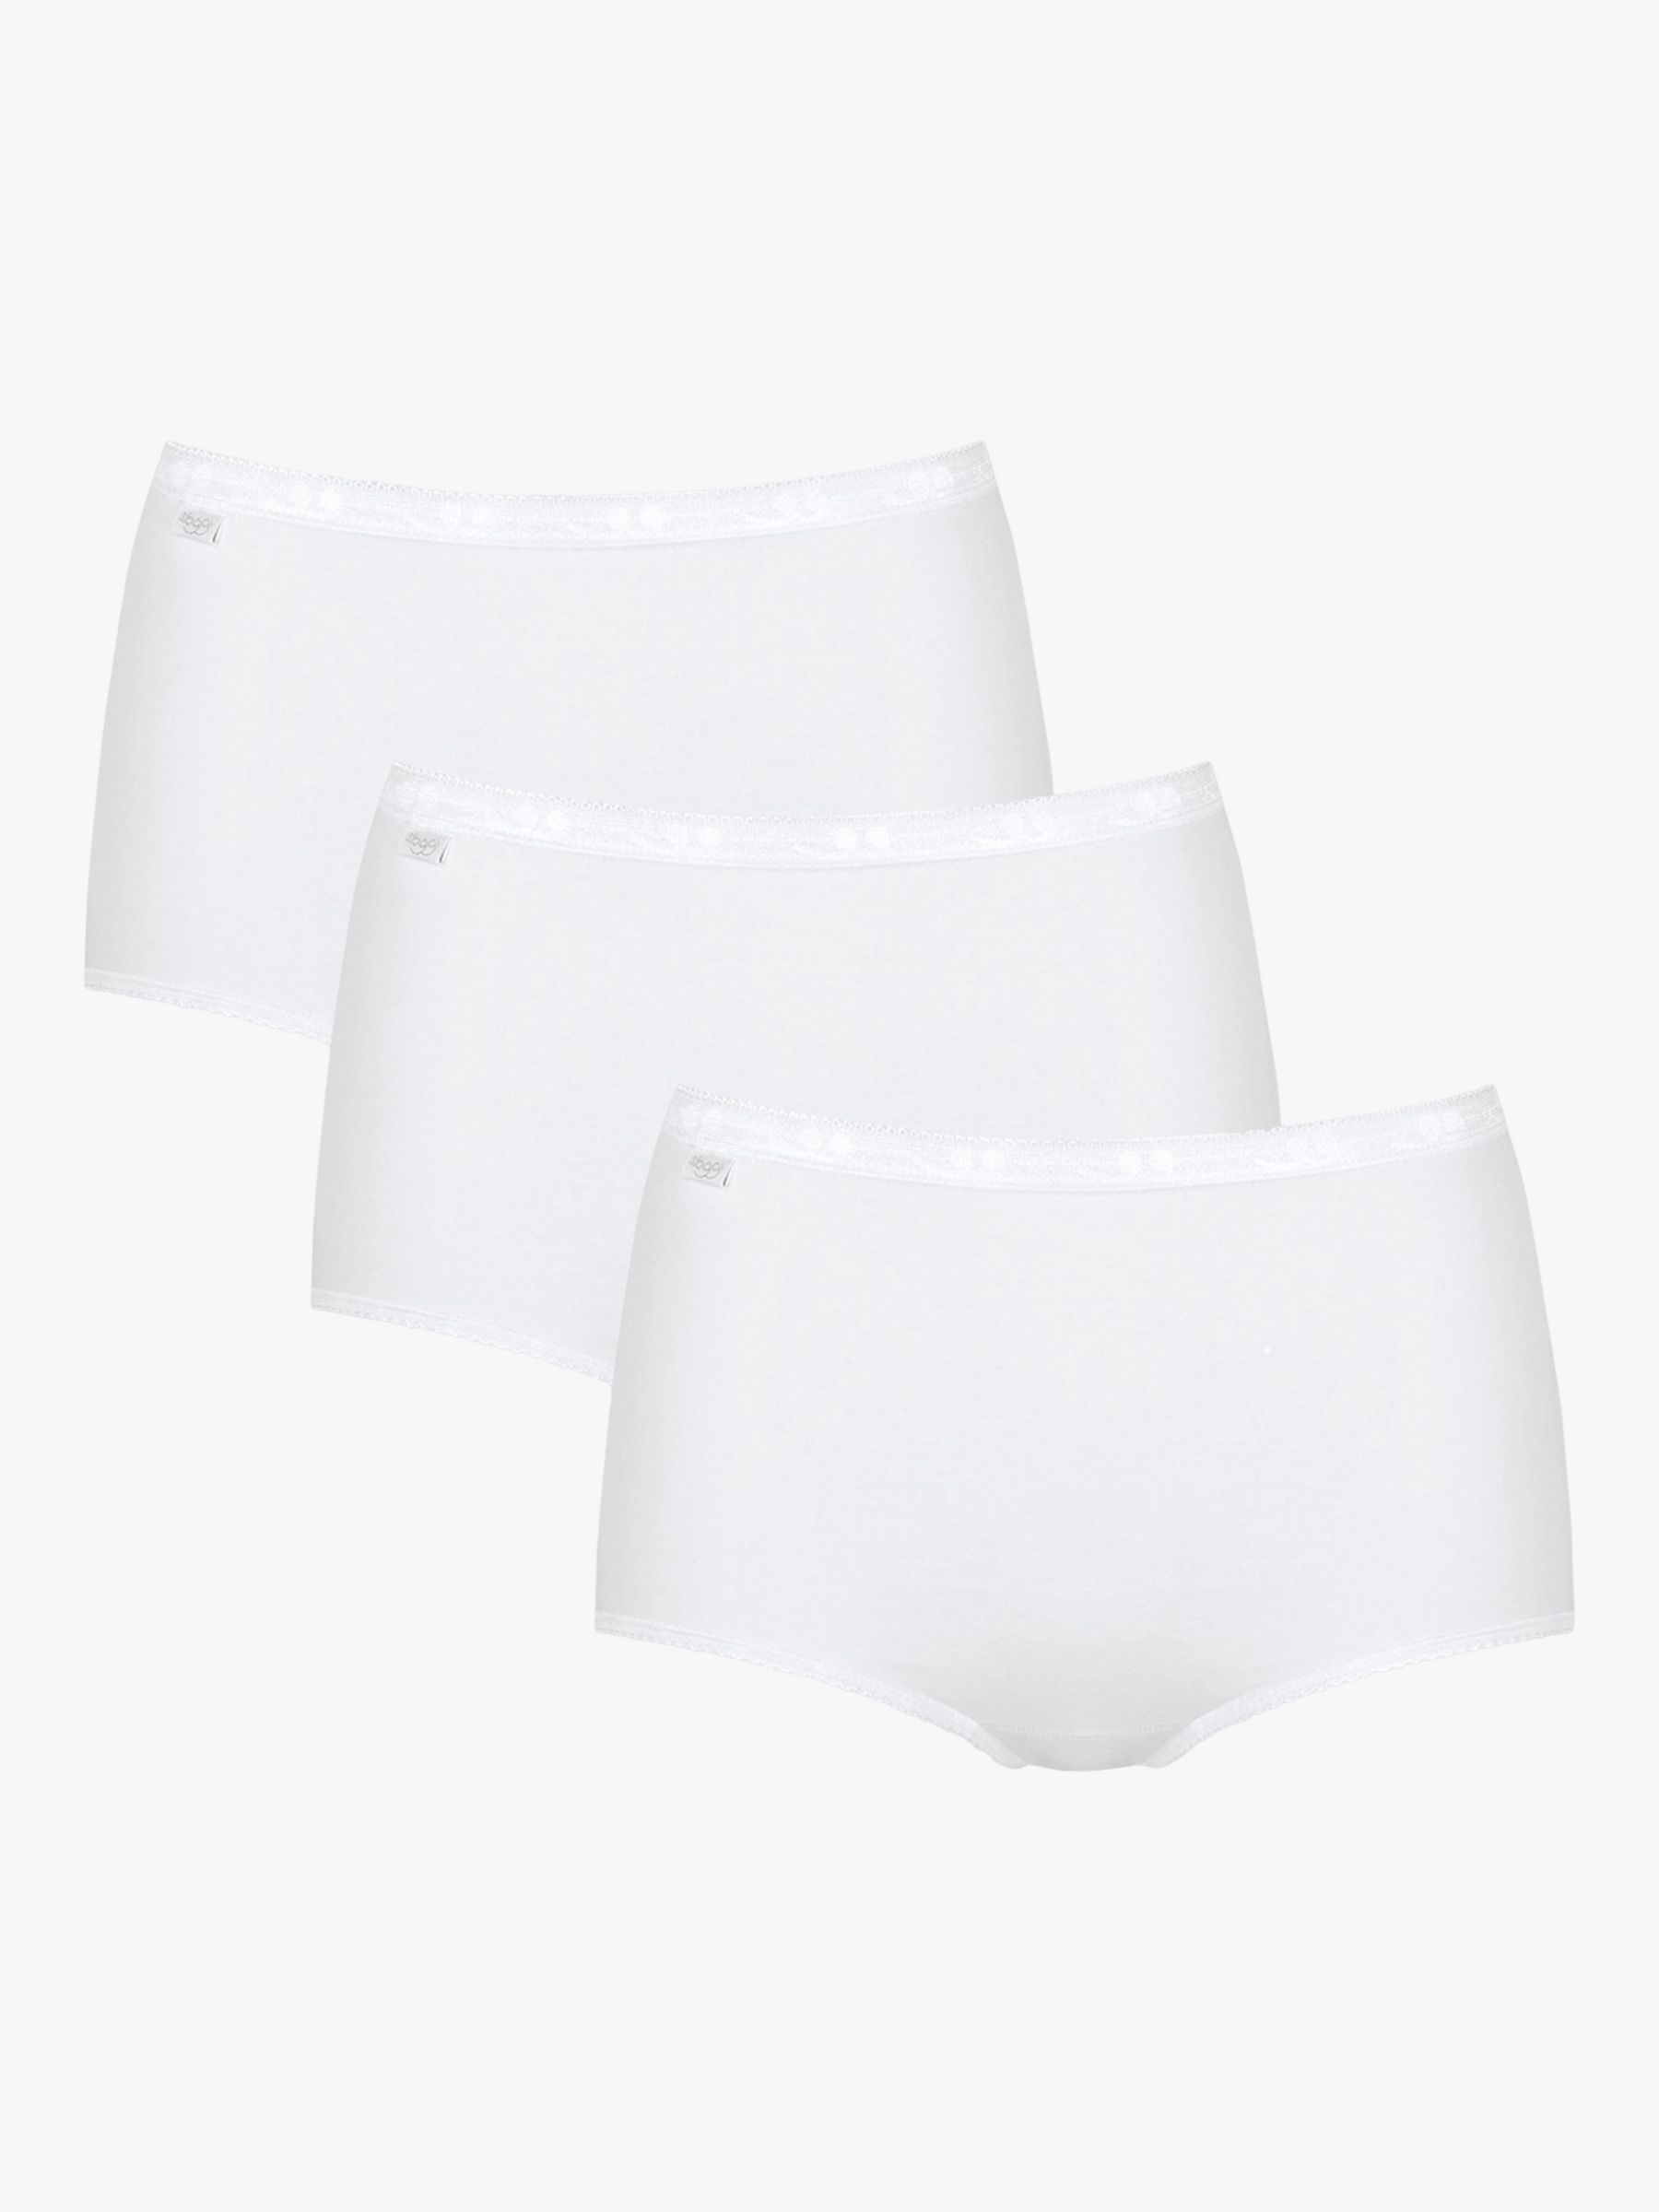 sloggi Basic+ Maxi Cotton Briefs, Pack of 3, White, 26